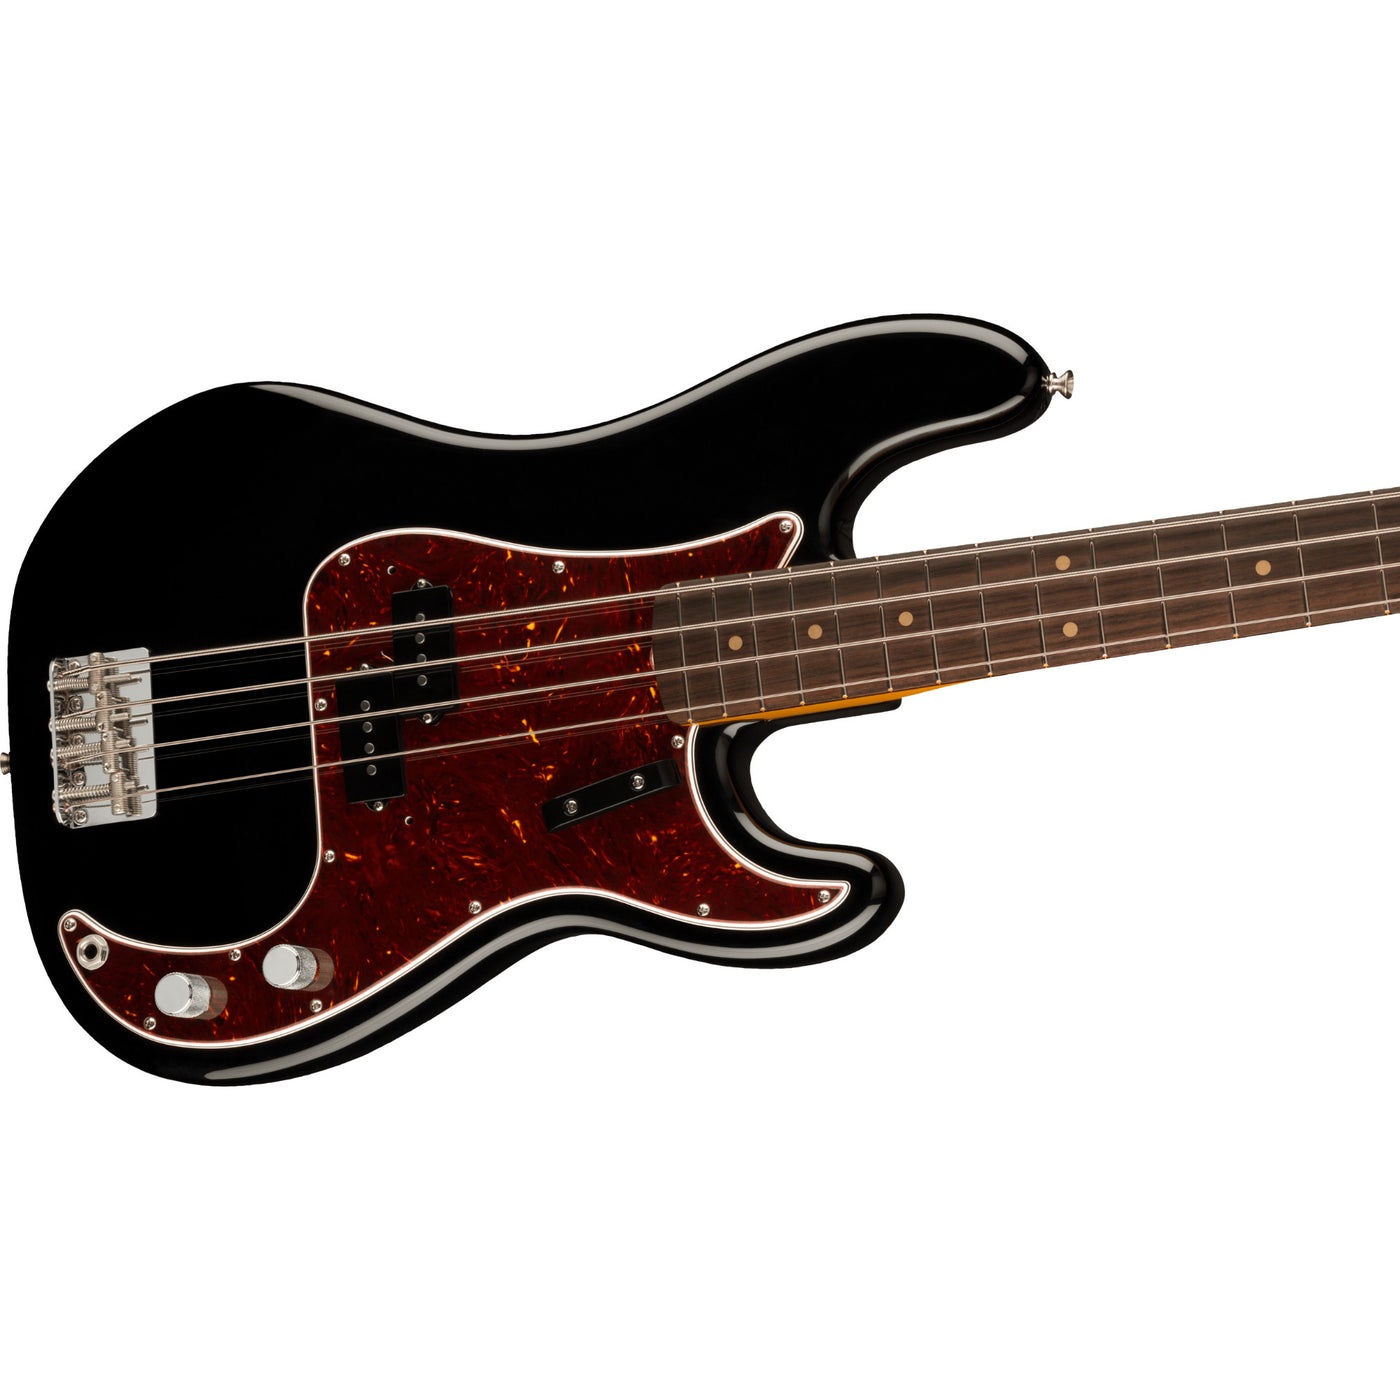 Fender American Vintage II 1960 Precision Bass Guitar, Black (0190160806)